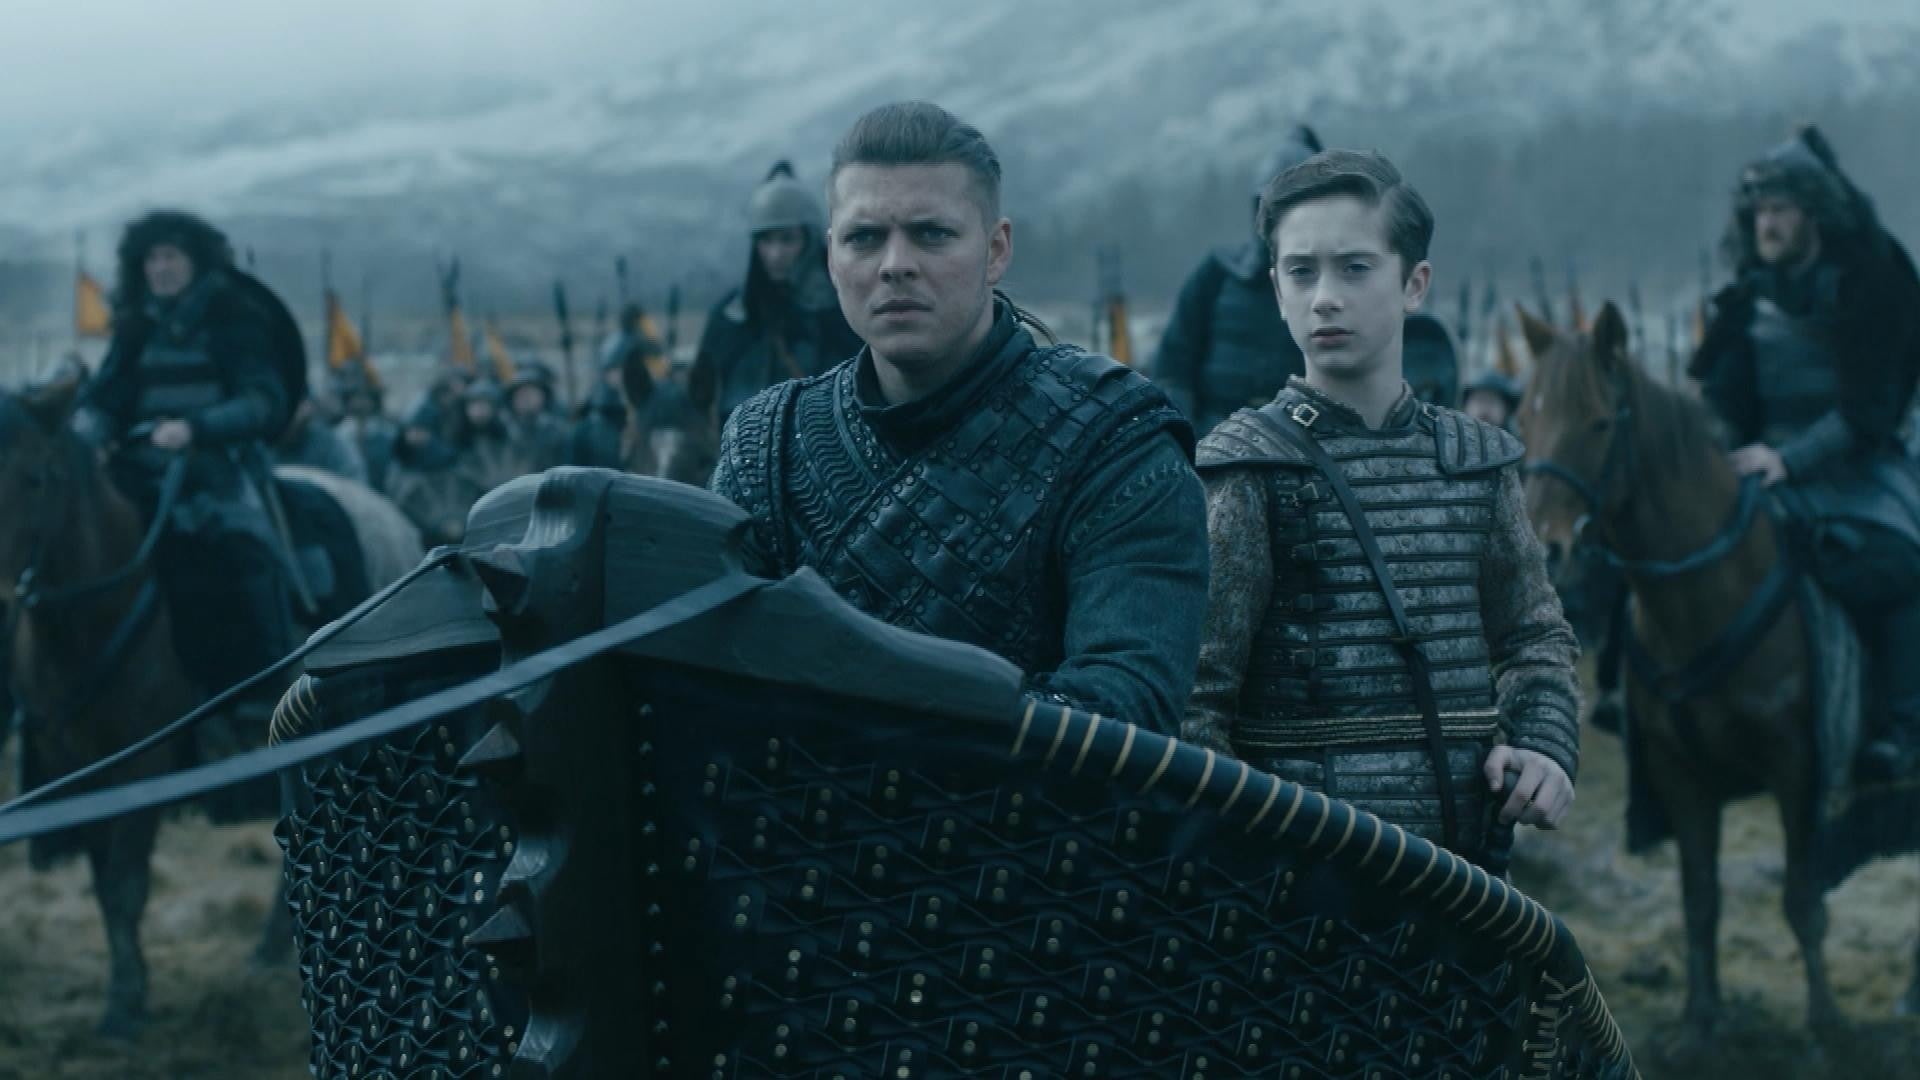 Vikings' season 4 premiere spoilers: Can Bjorn actually kill his uncle?